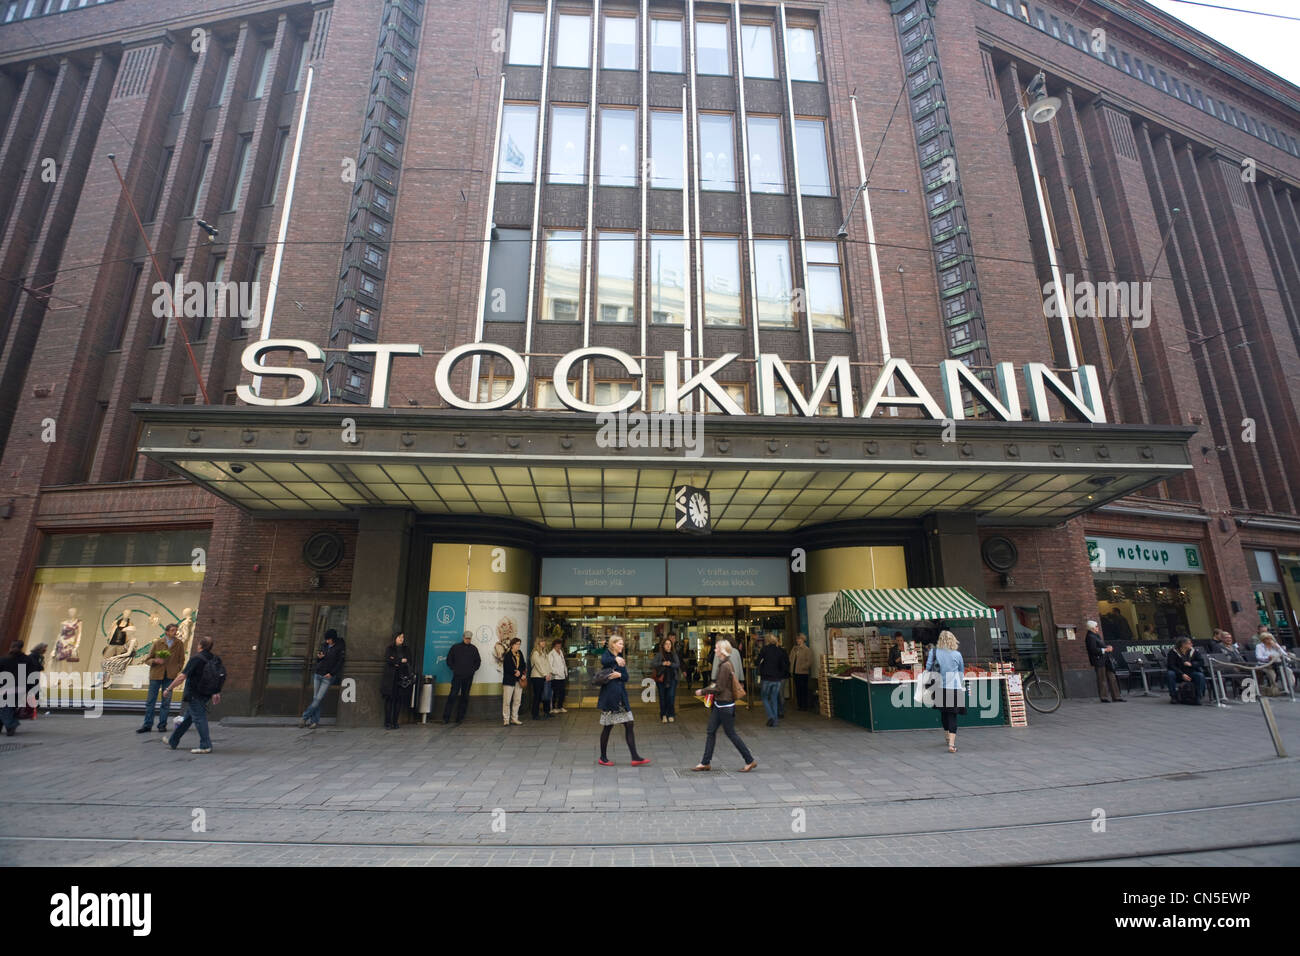 finland-helsinki-stockmann-shopping-mall-stock-photo-47449970-alamy